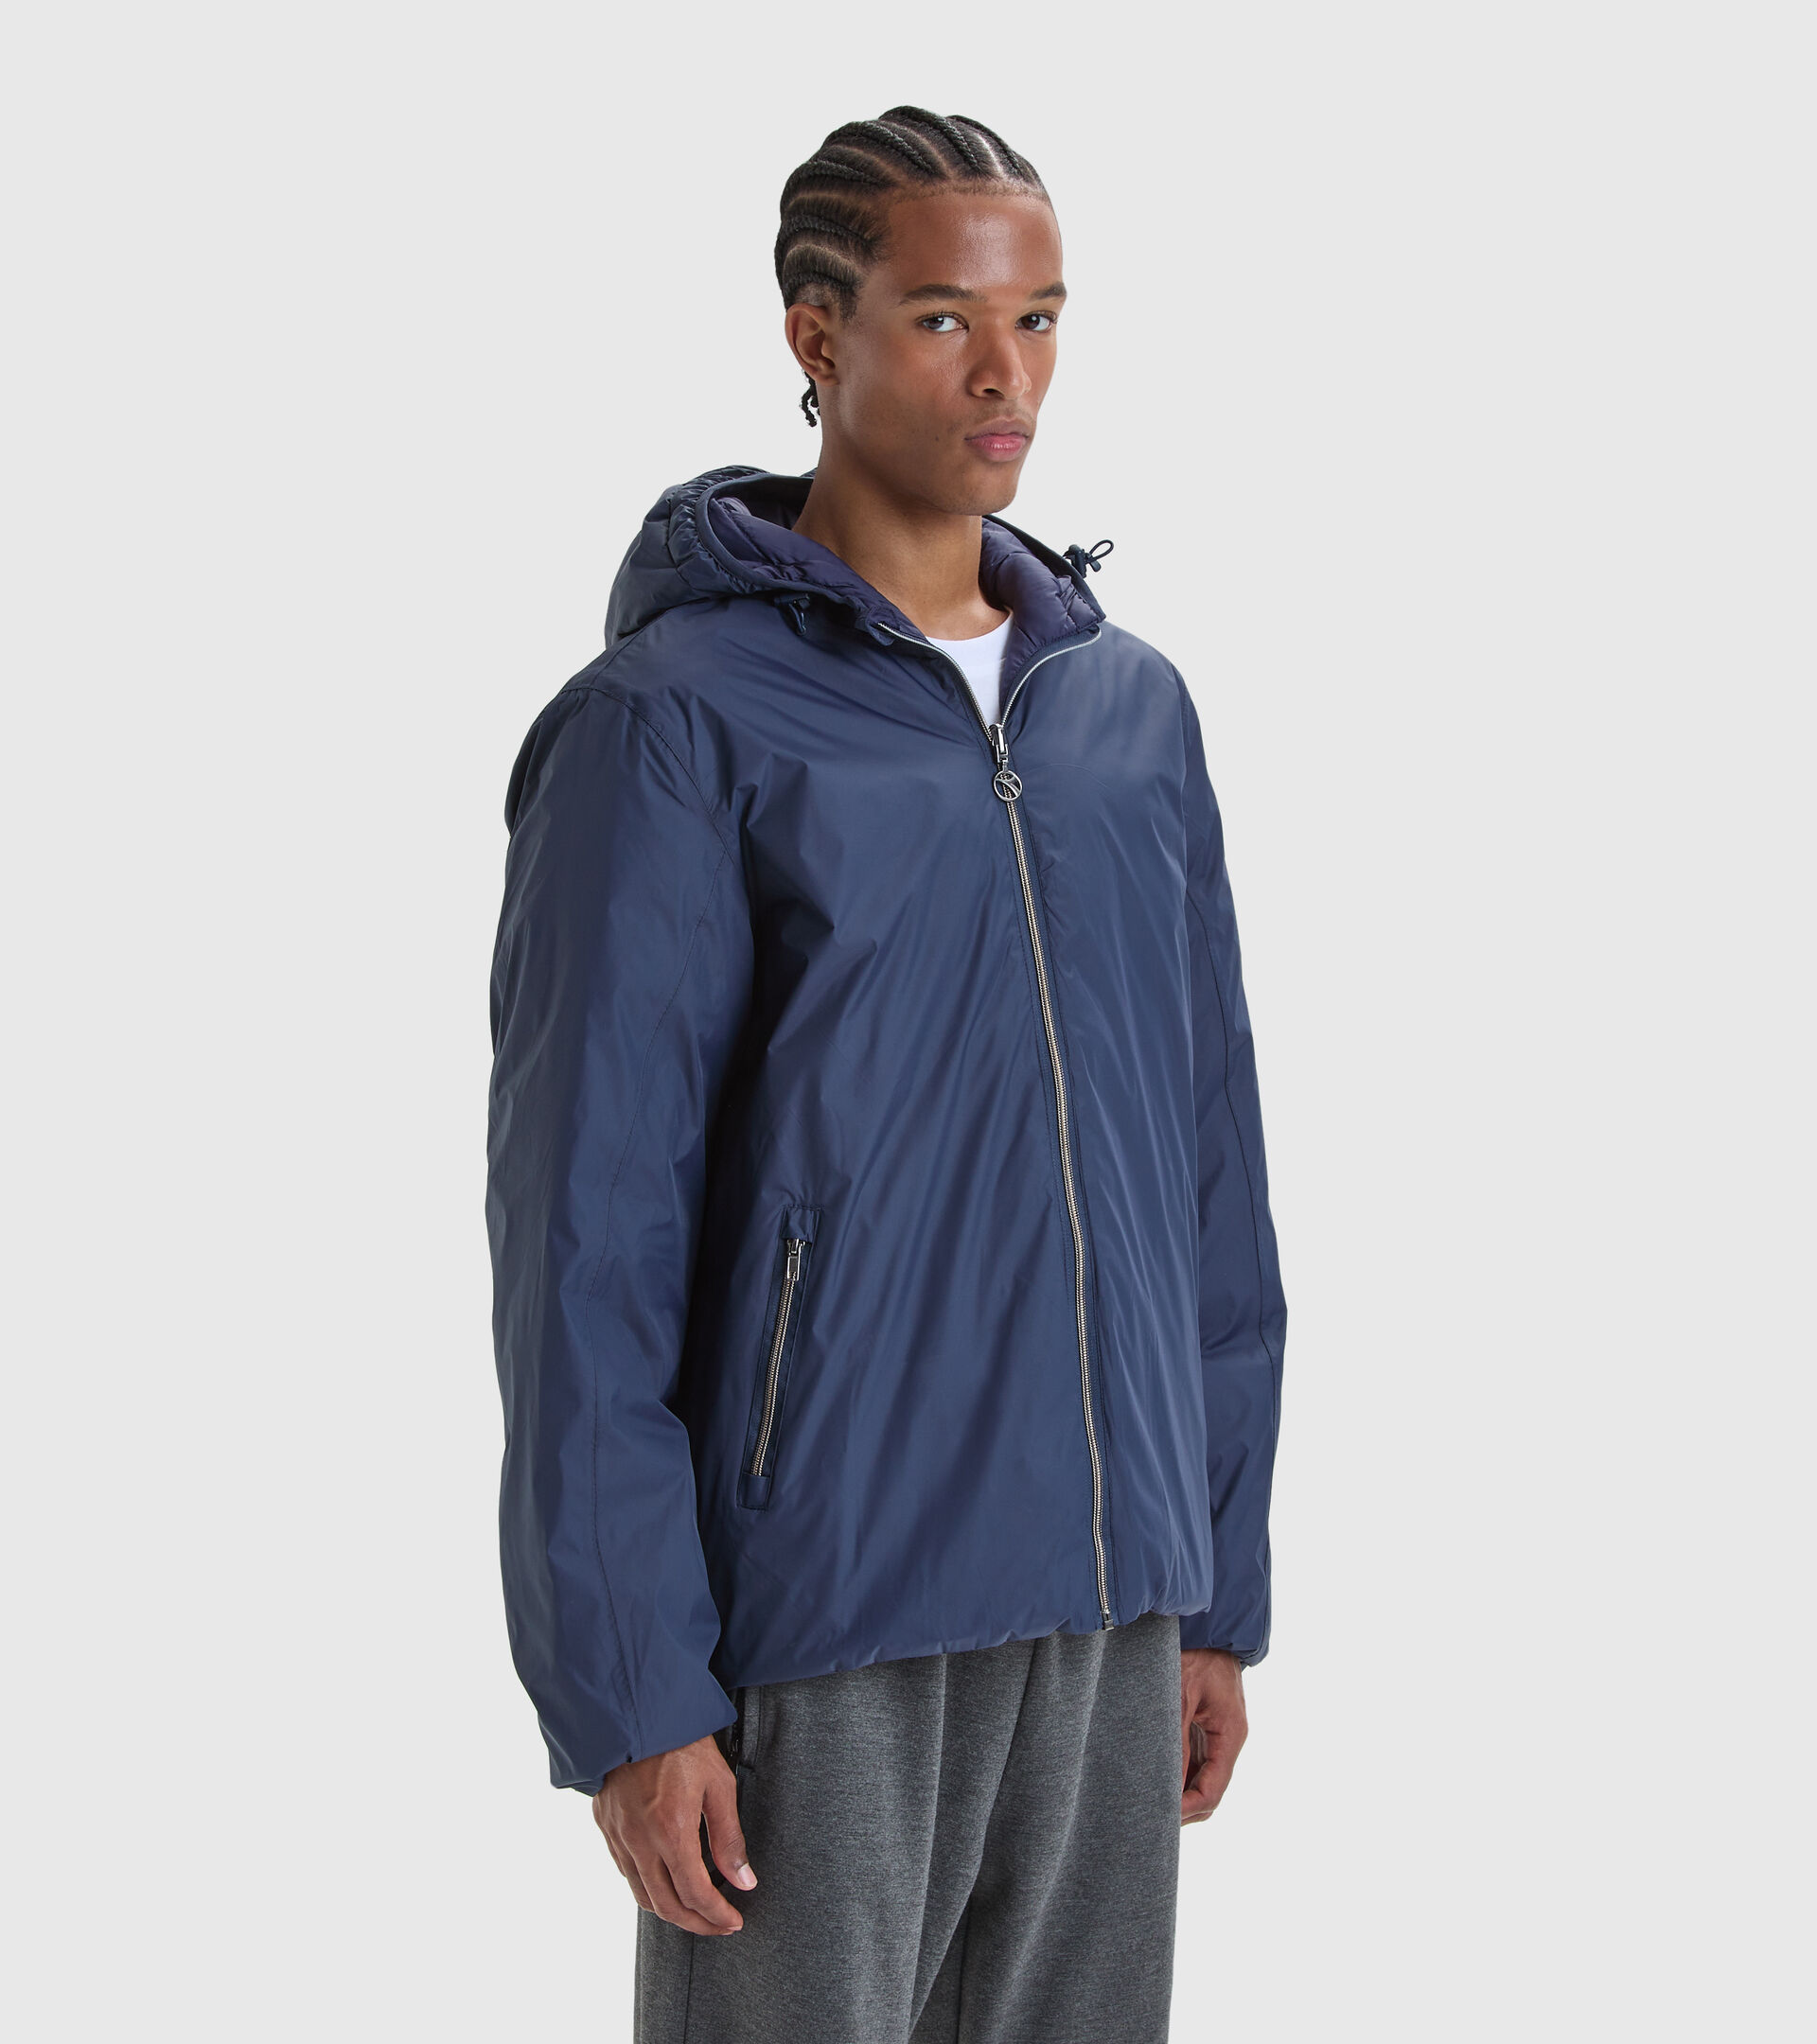 Prada Reversible Hooded Windbreaker Jacket in Gray for Men